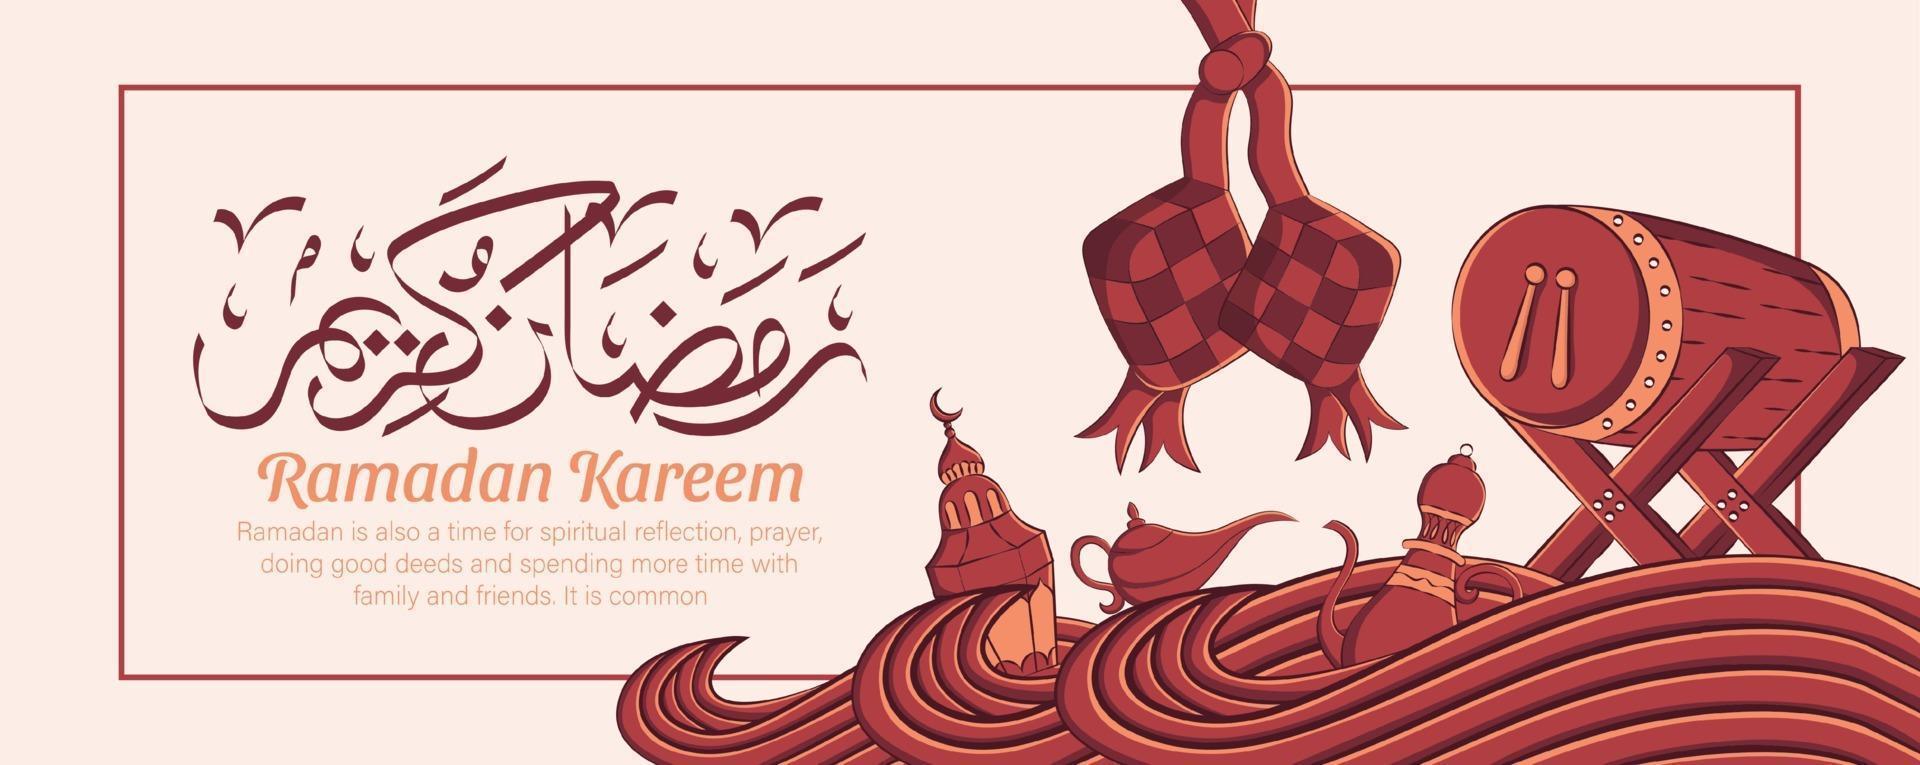 Ramadan kareem banner with hand drawn islamic illustration ornament on white background. vector